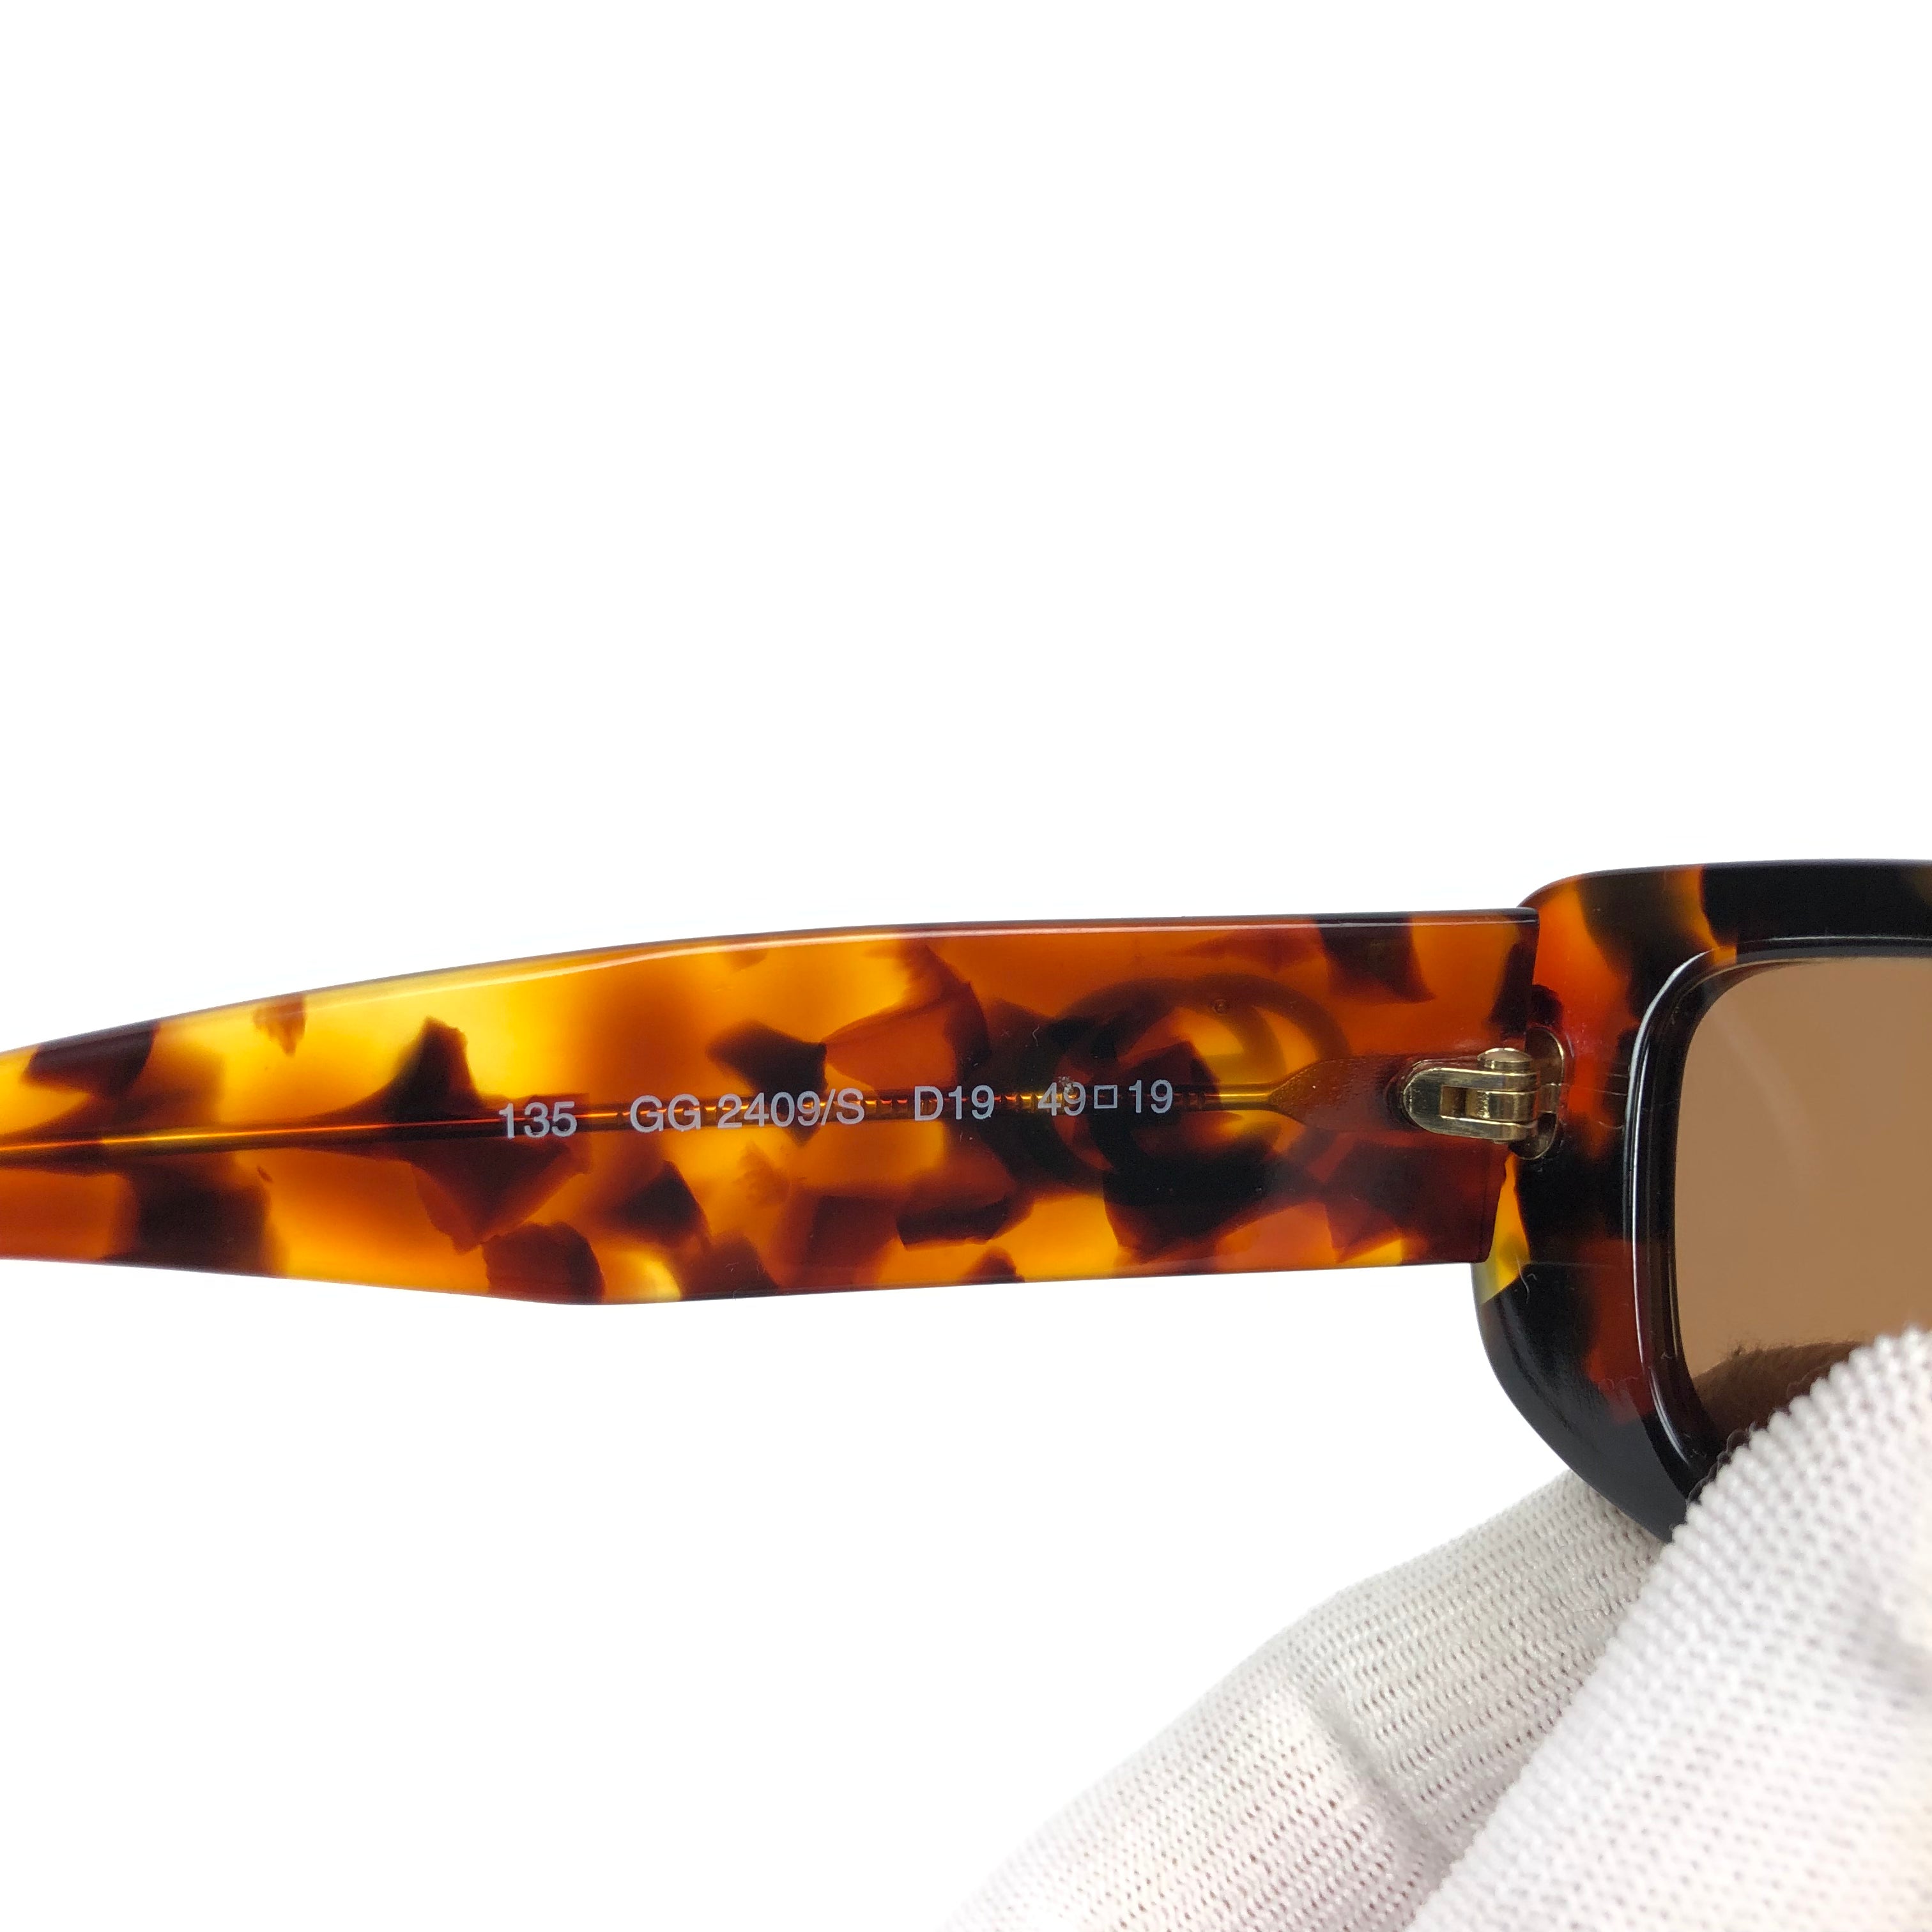 Gucci Tortoise Shell Sunglasses